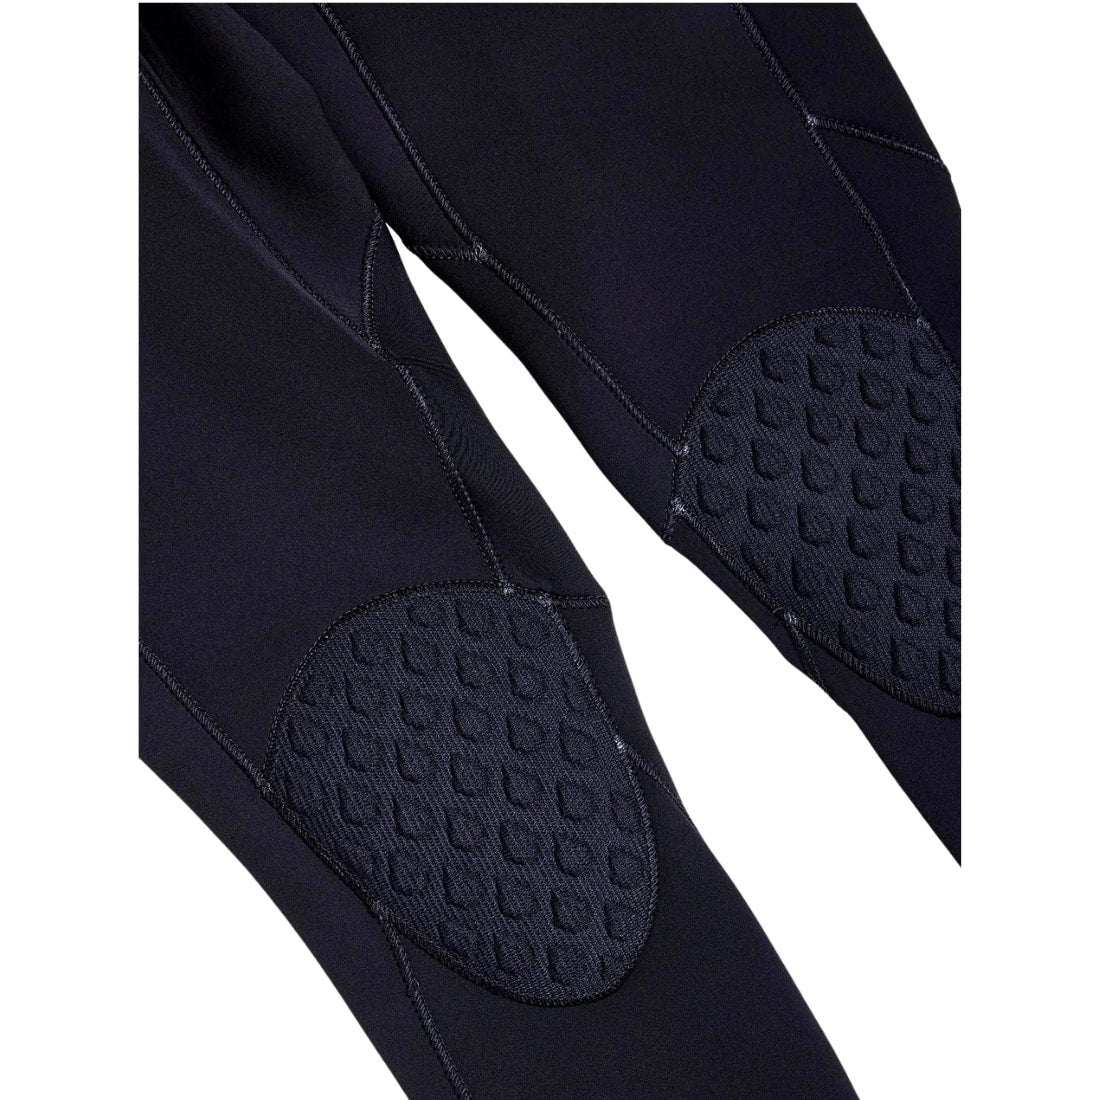 Volcom 4/3mm Modulator Chest Zip Wetsuit - Black - Mens Full Length Wetsuit by Volcom